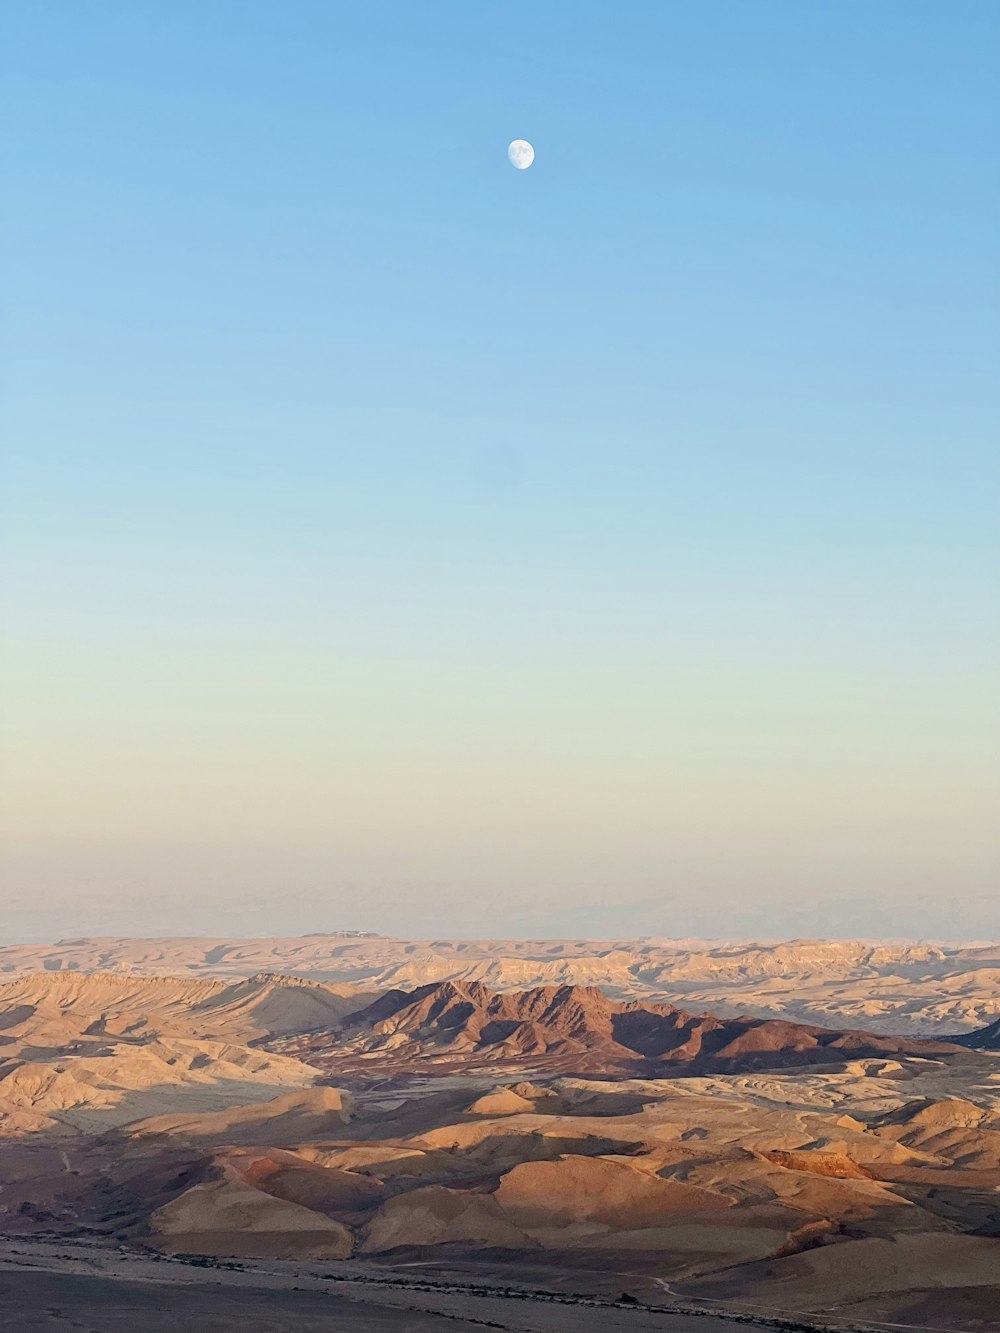 a desert landscape with a moon